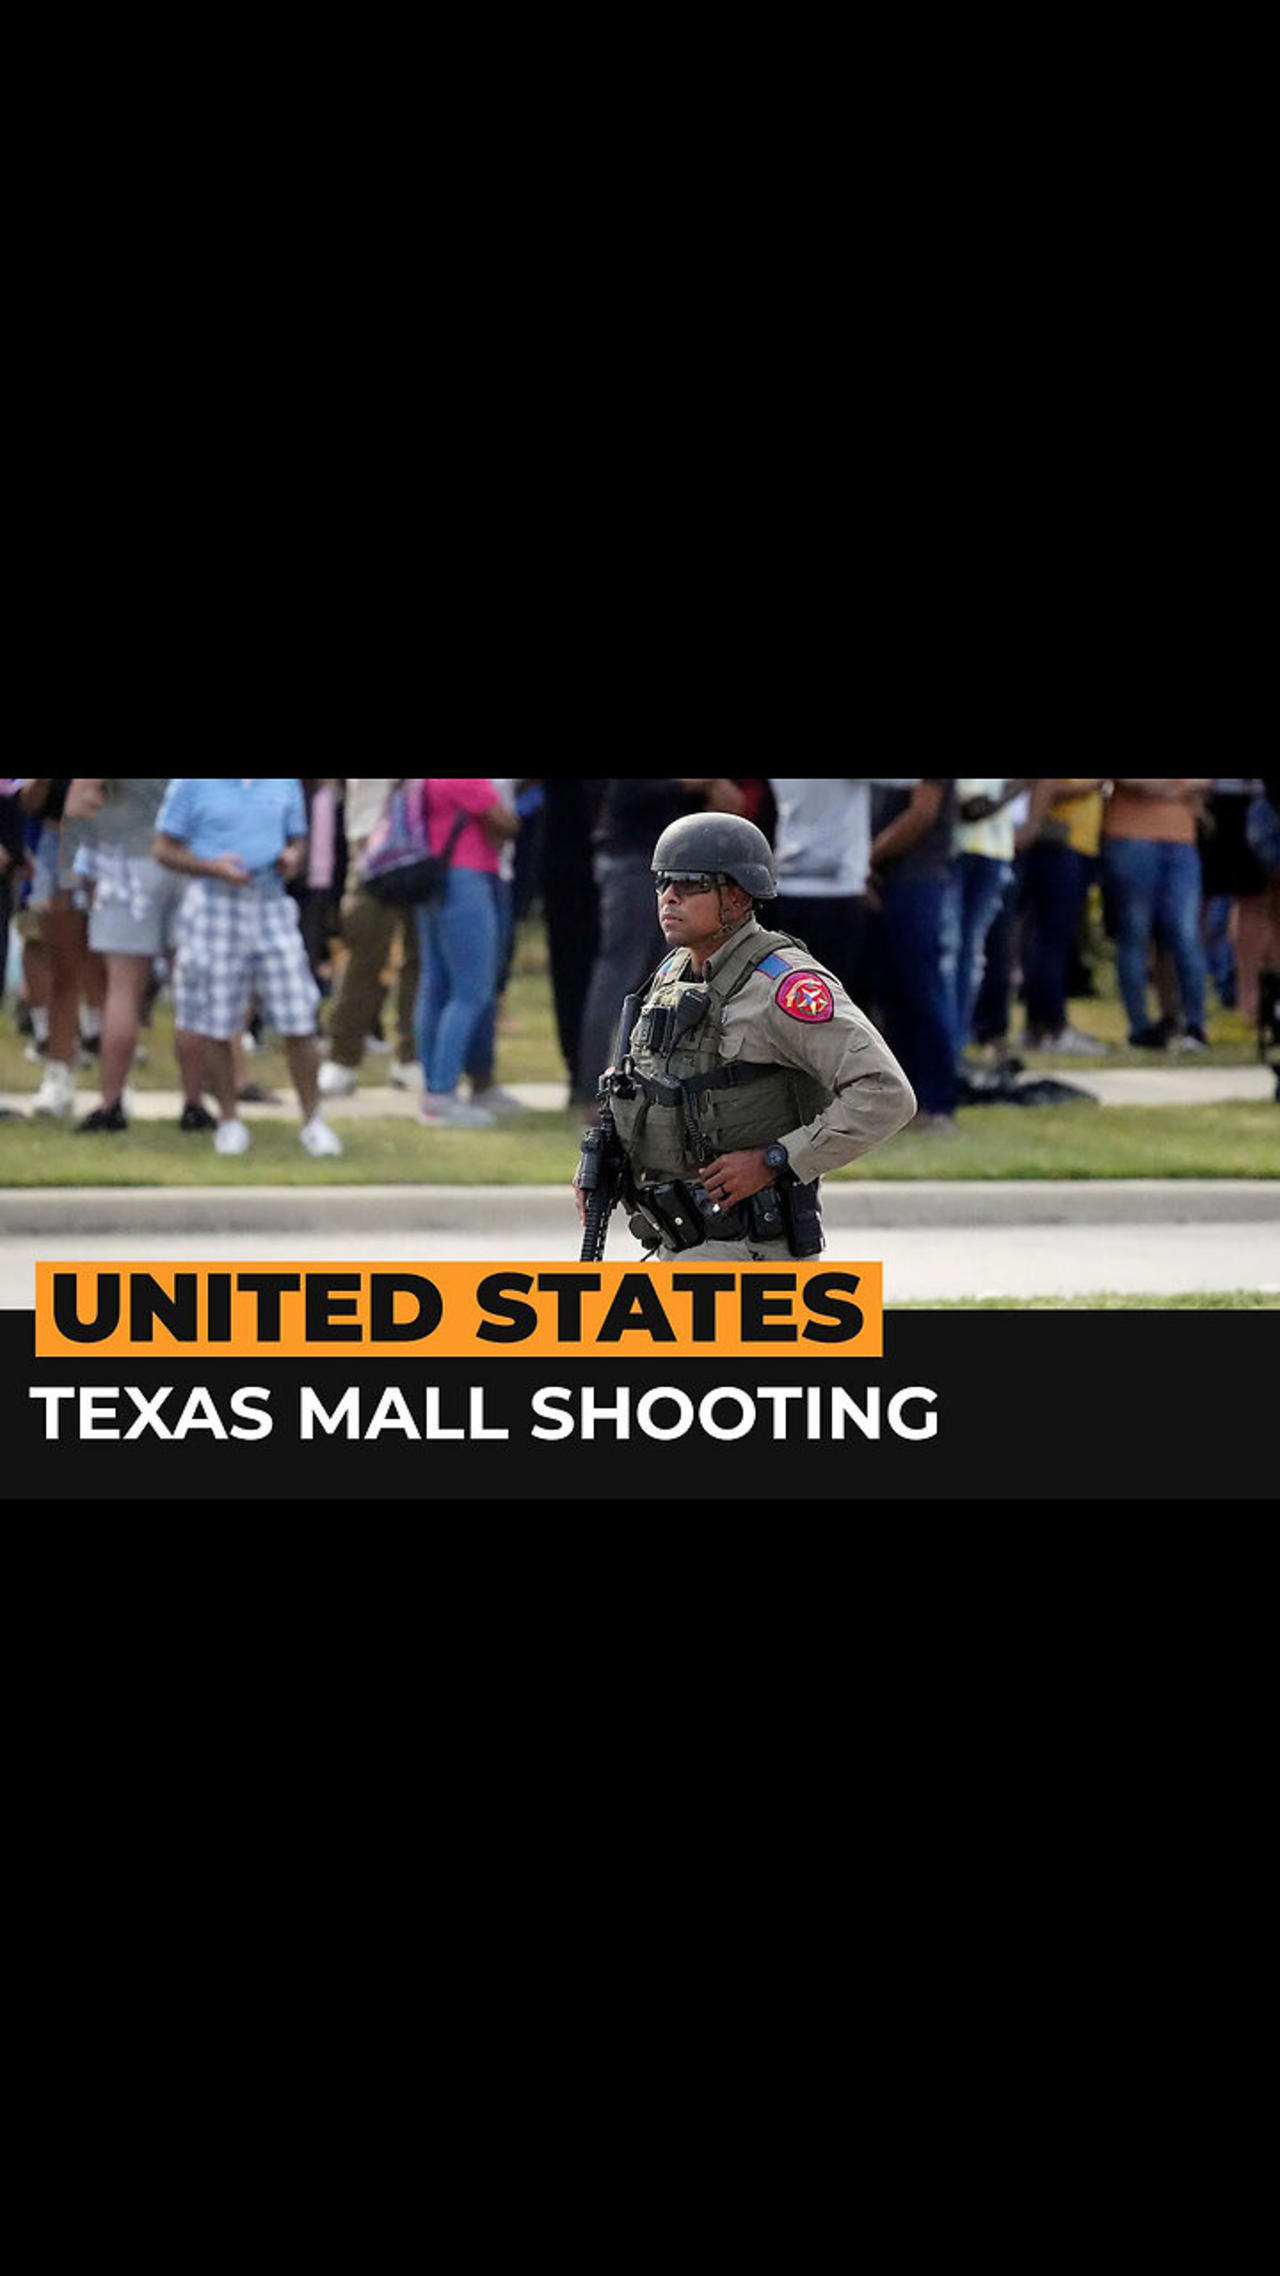 Texas mall mass shooting caught on camera | Newsfeed